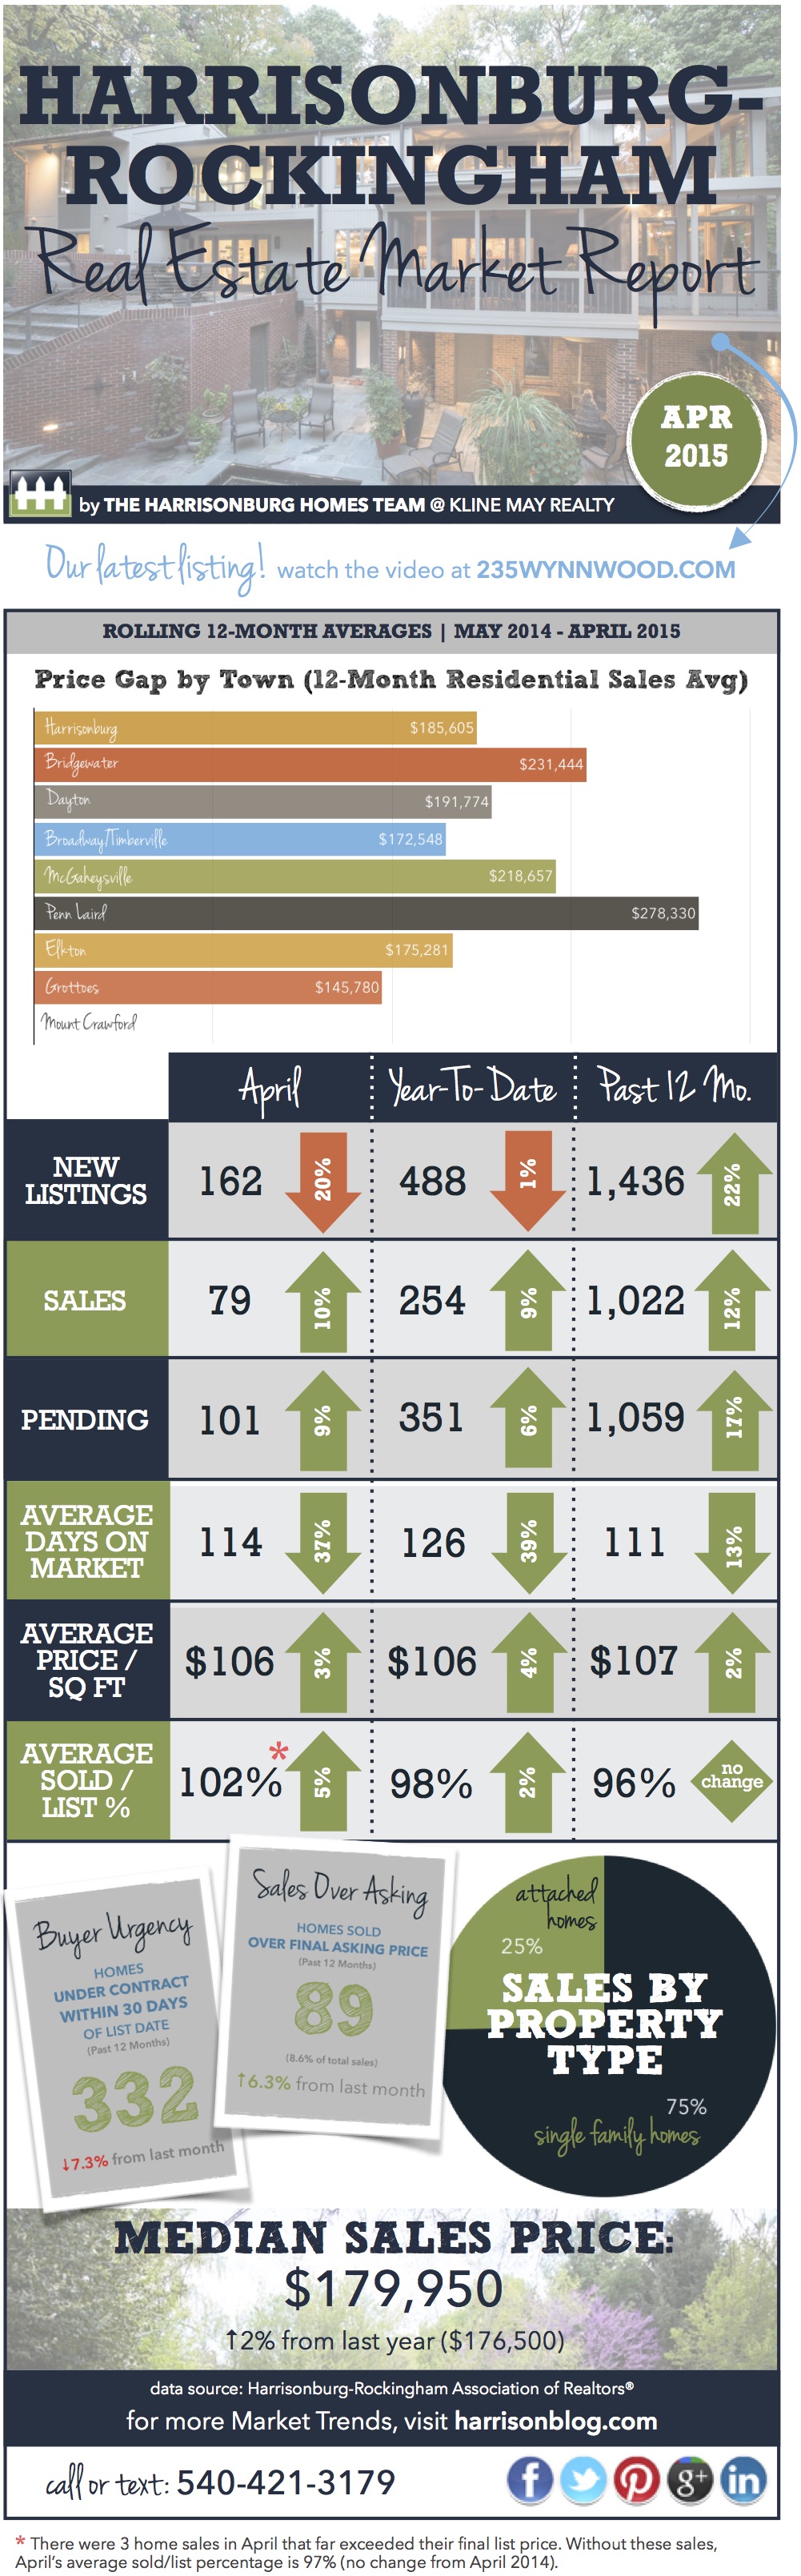 Harrisonburg Real Estate Market Report [INFOGRAPHIC]: April 2015